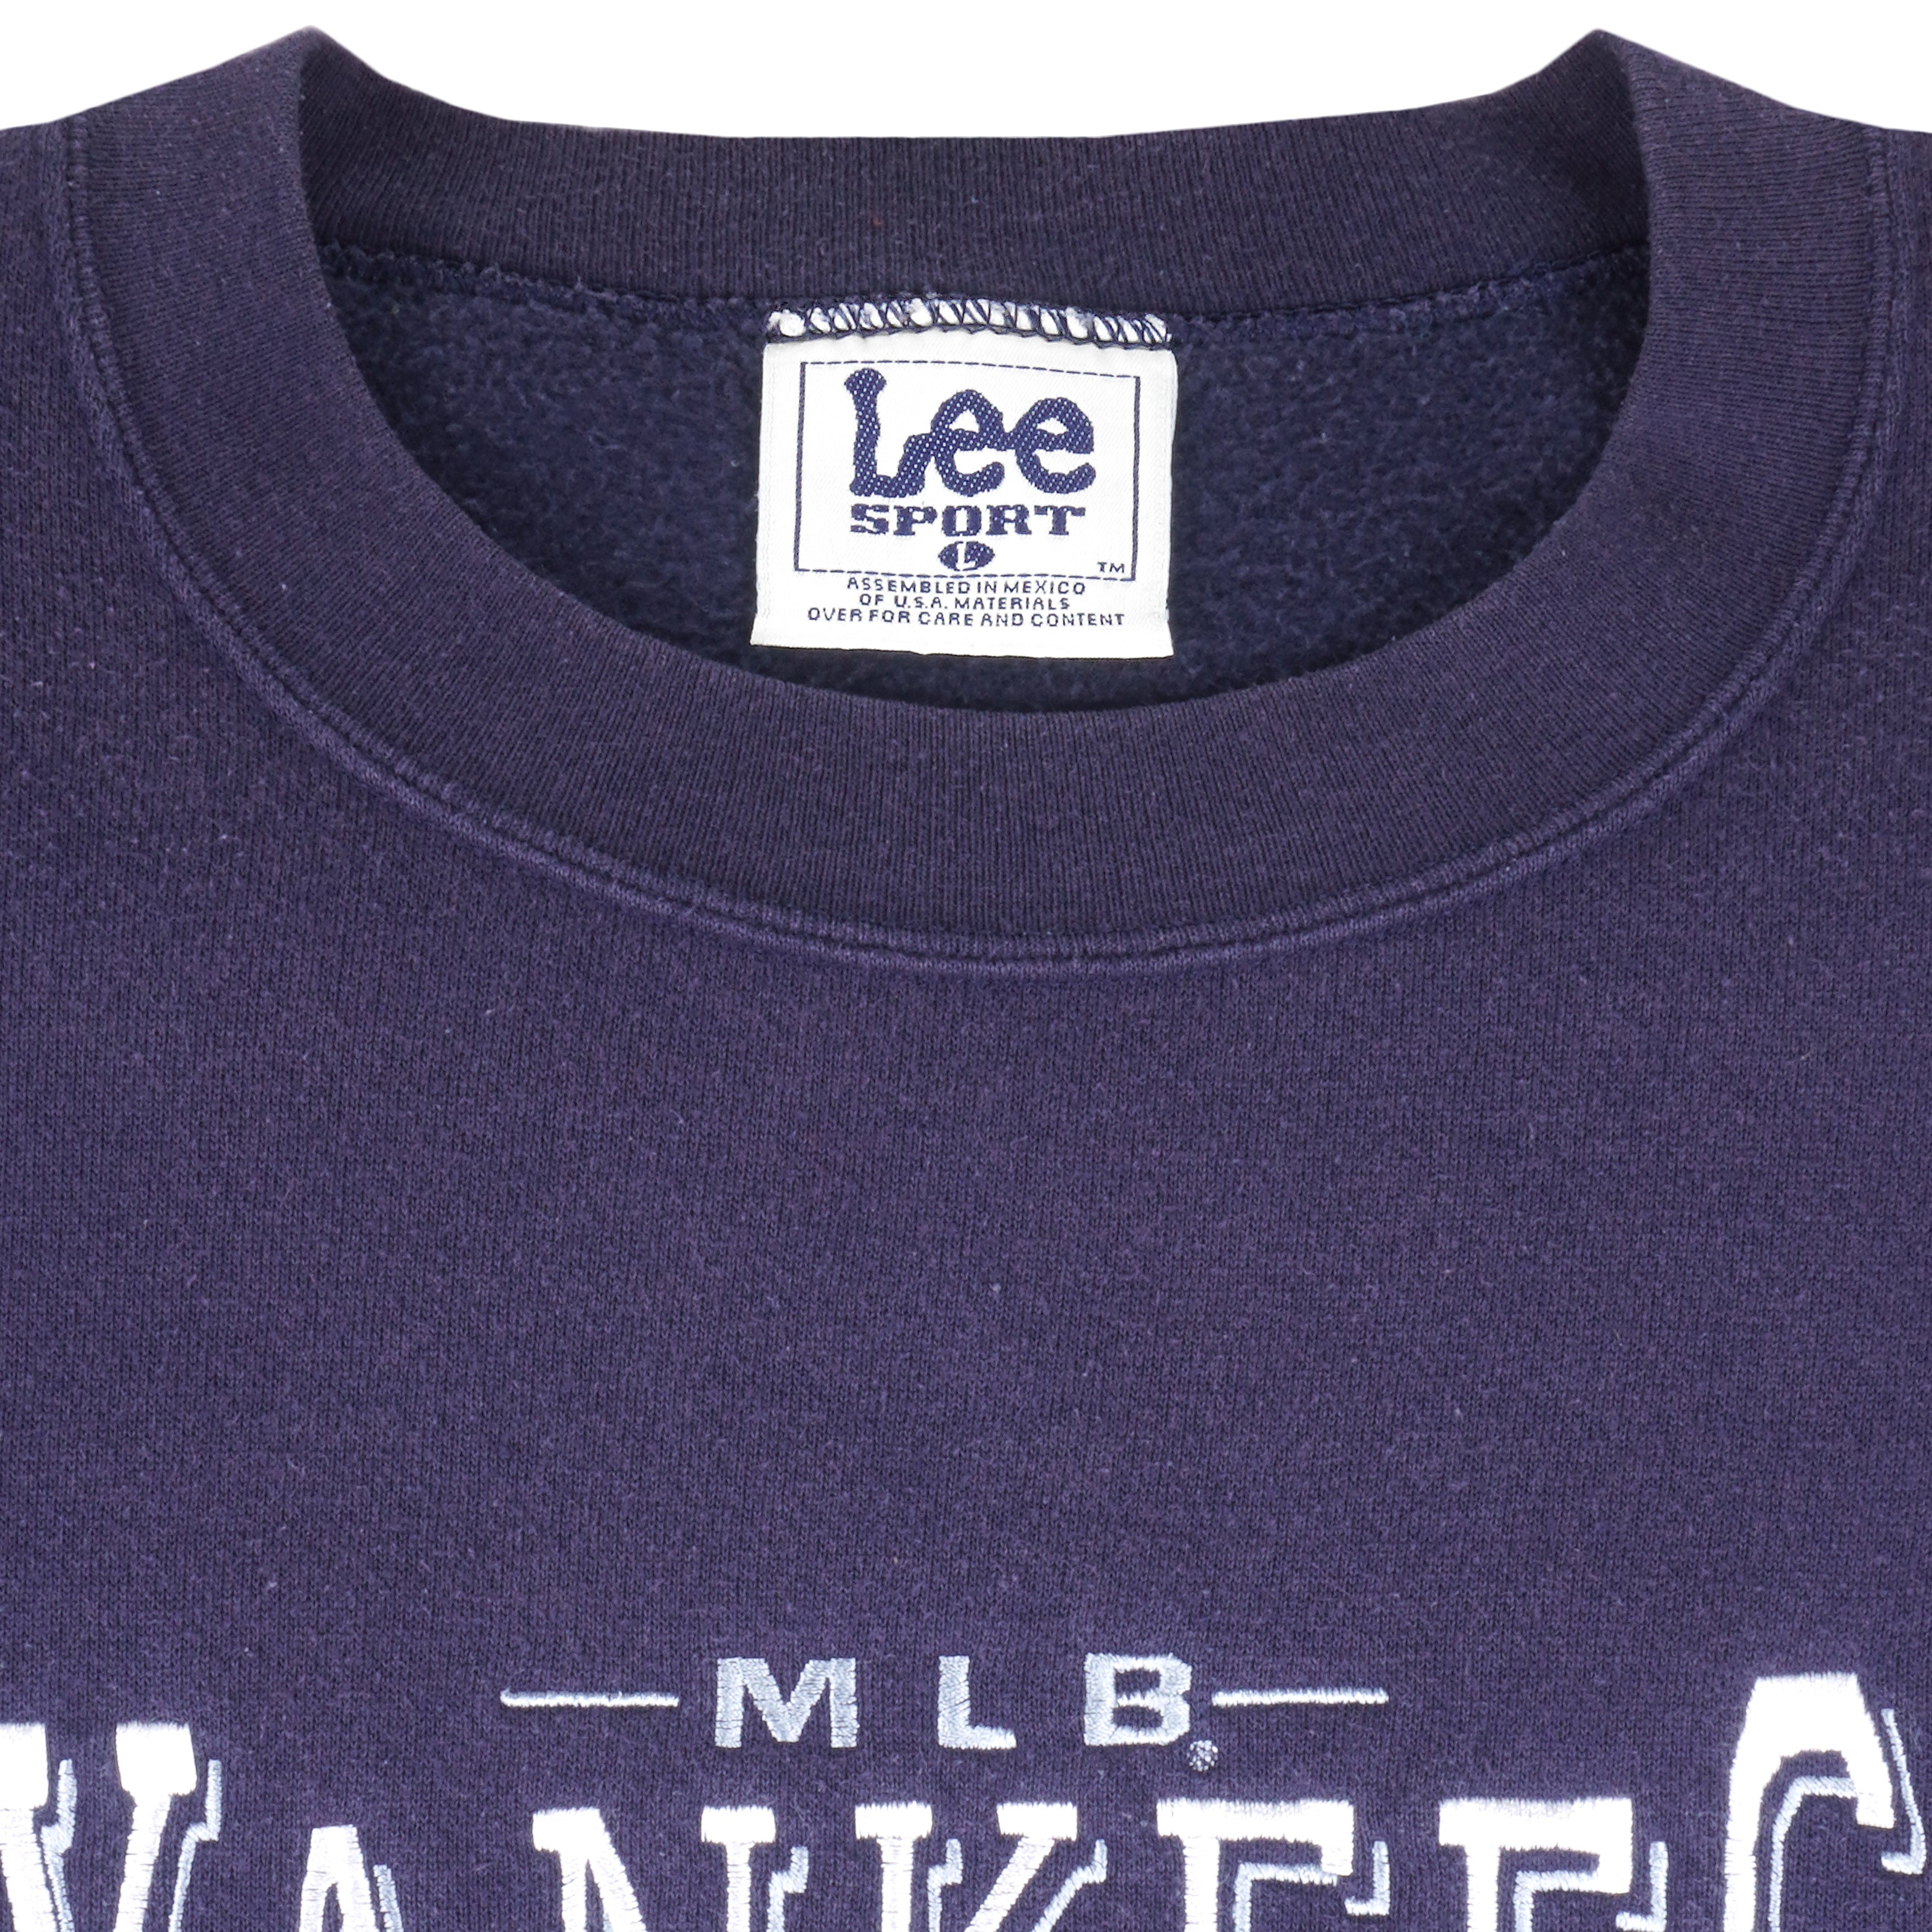 New York Yankees Jersey Large, Lee Sport